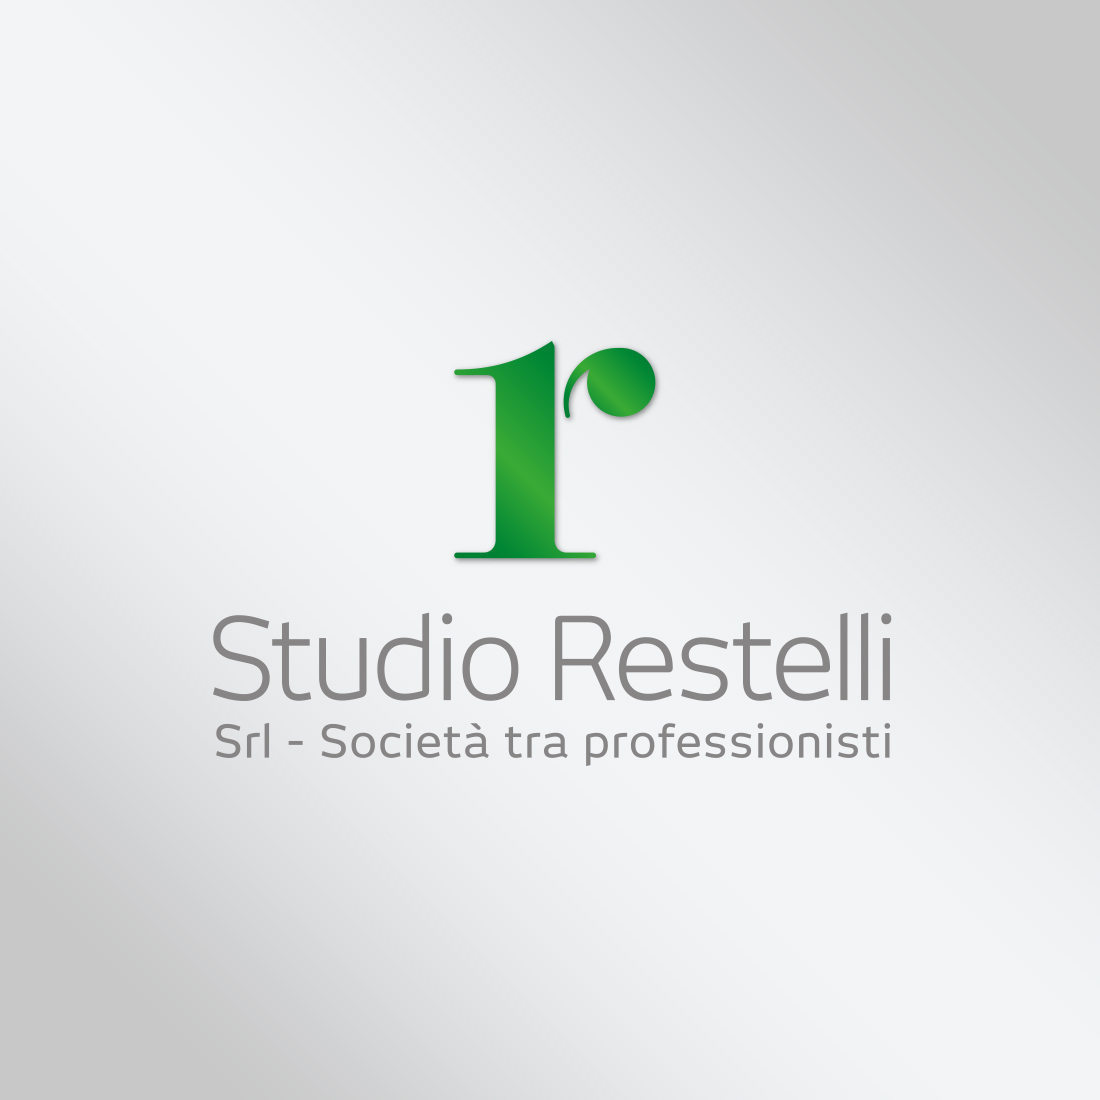 Corporate identity Studio Restelli